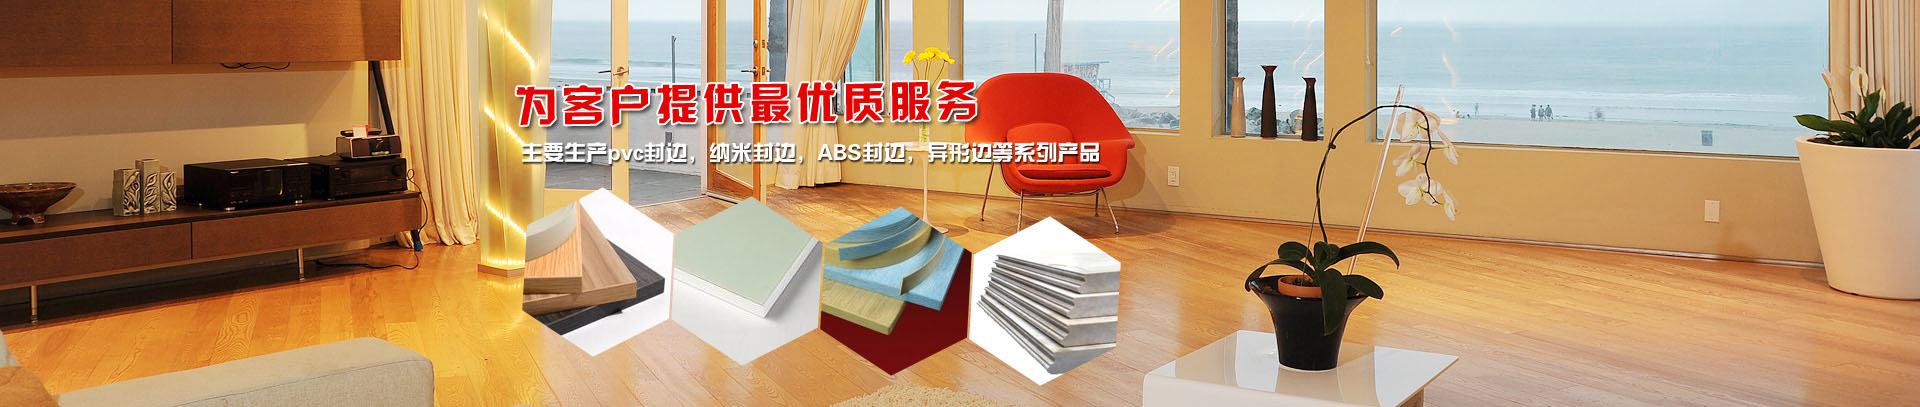 Dongguan City European Plastic Decoration Material Co., Ltd